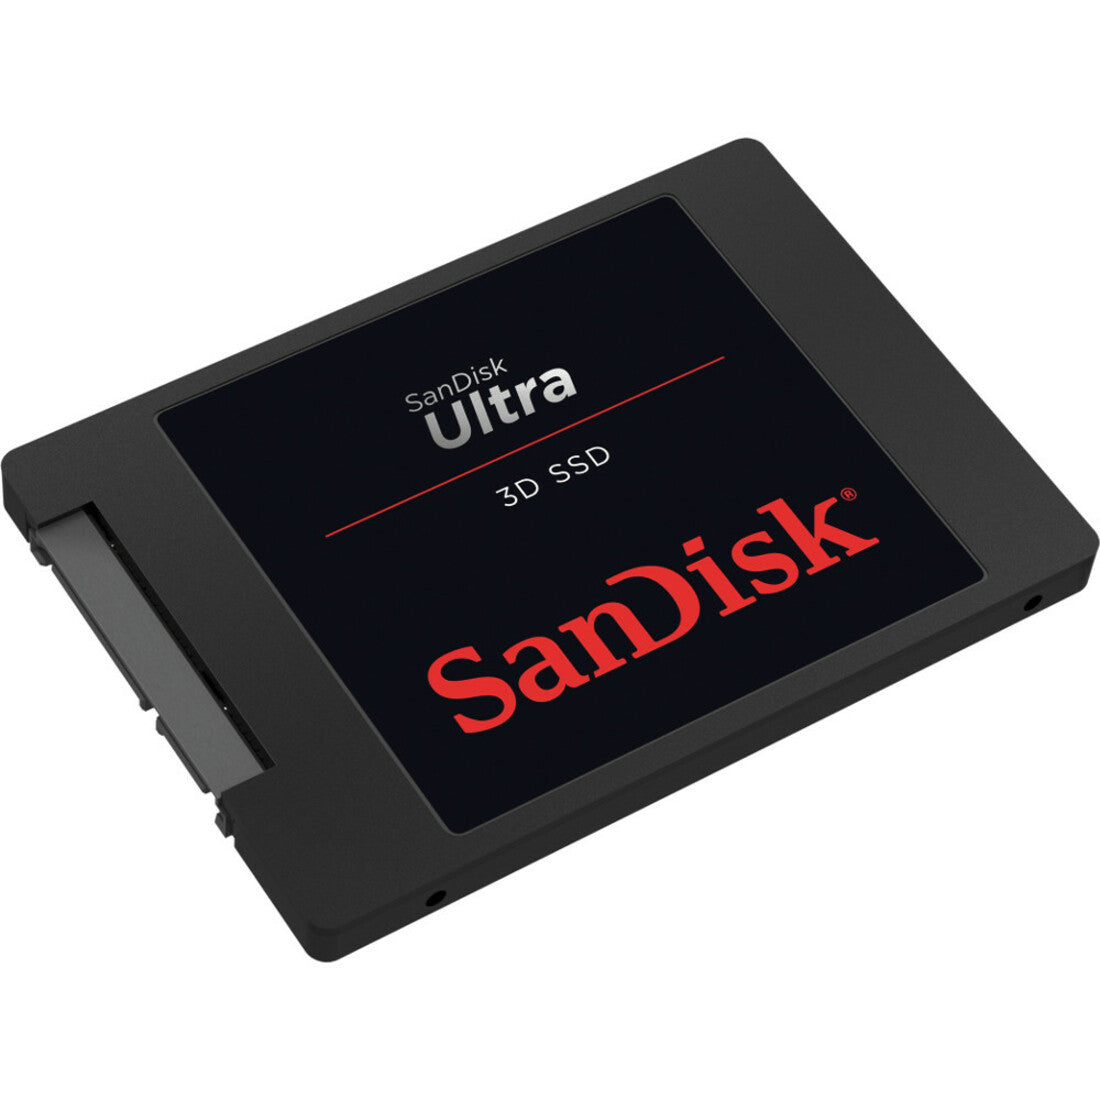 SanDisk SDSSDH3-1T00-G25 ULTRA 3D SSD 1TB, Fast Read/Write Speeds, 5-Year Warranty